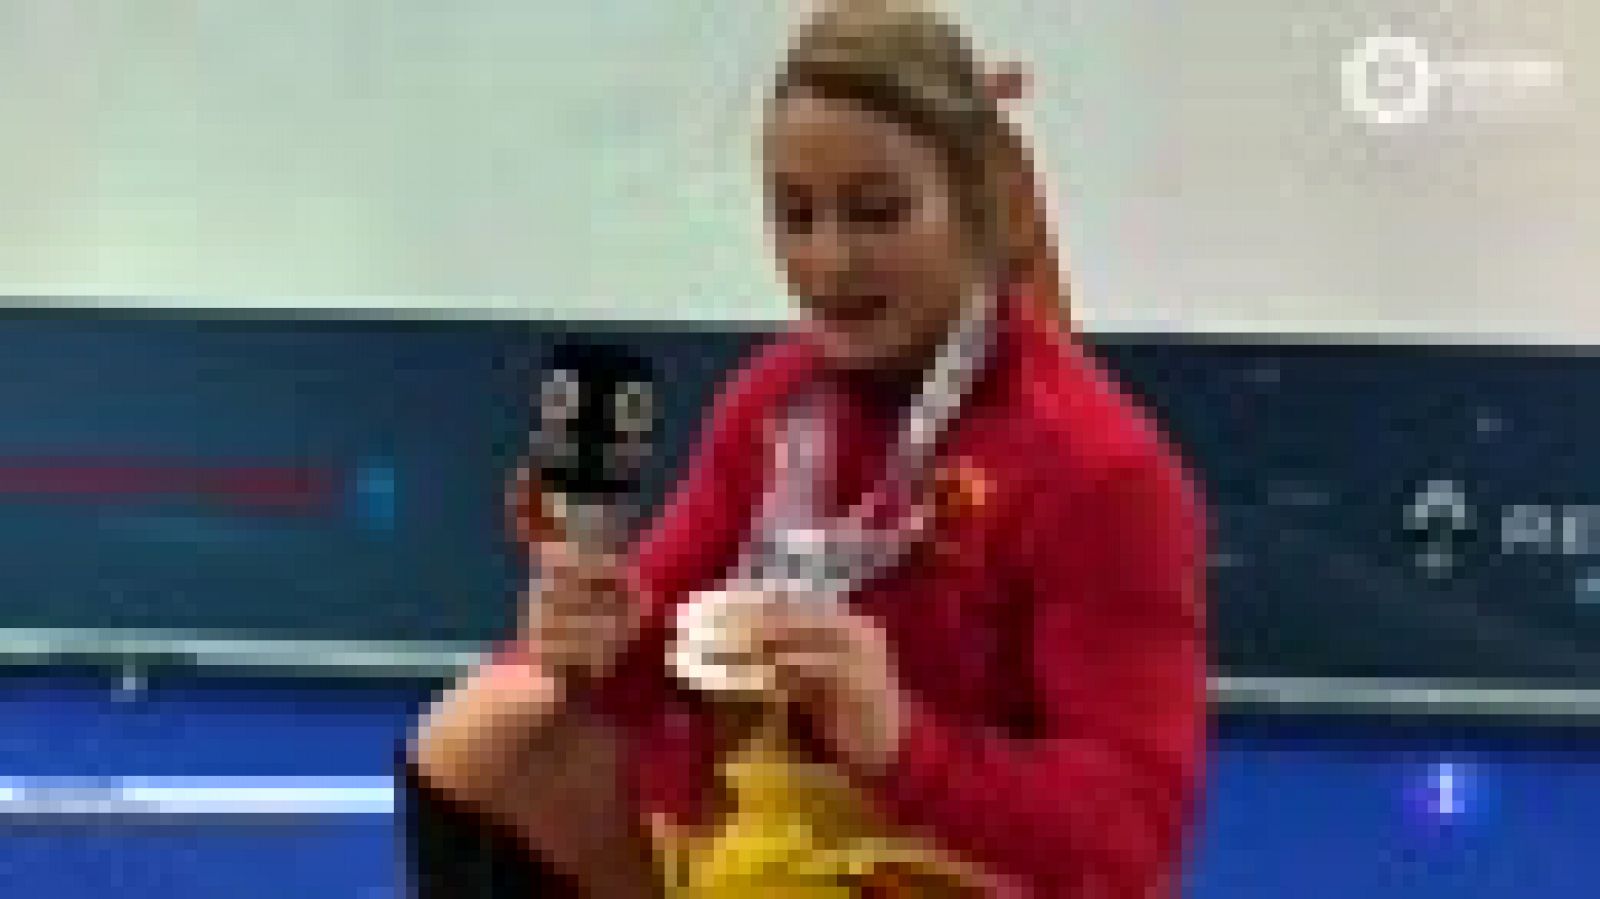 Lydia Valentín, campeona de Europa por cuarta vez